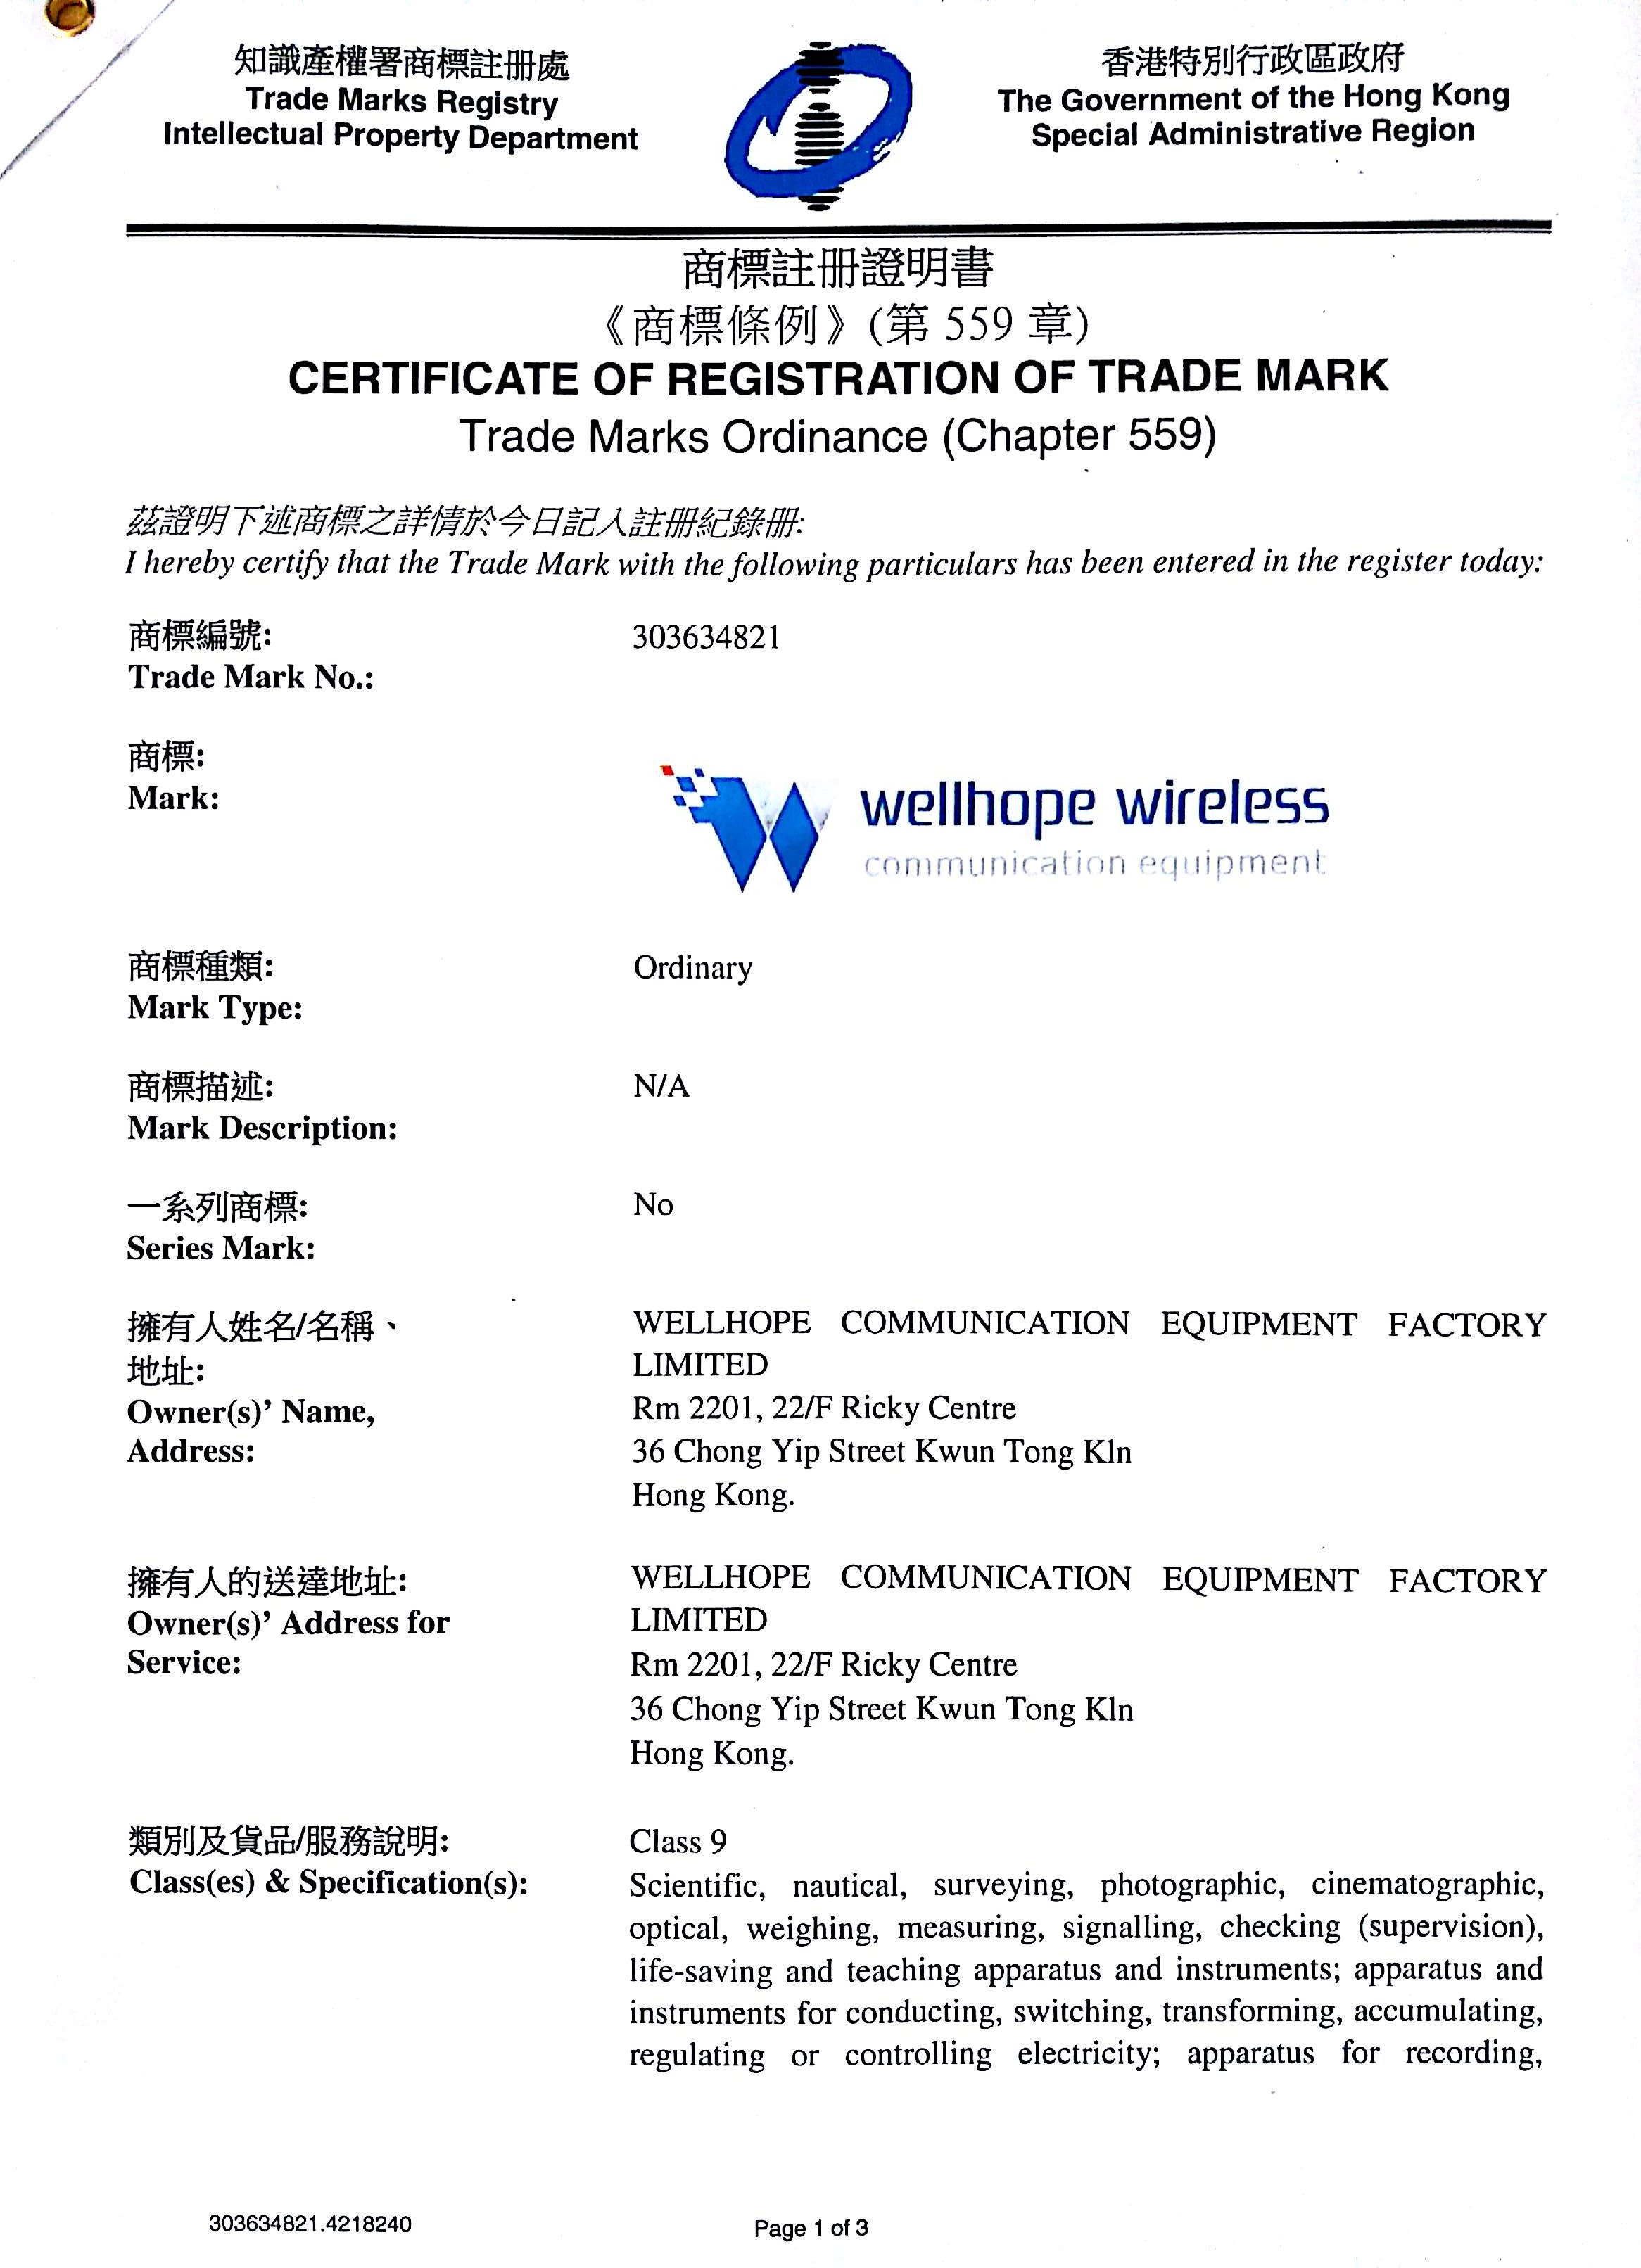 marca registrada de wellhope wireless ha registrado